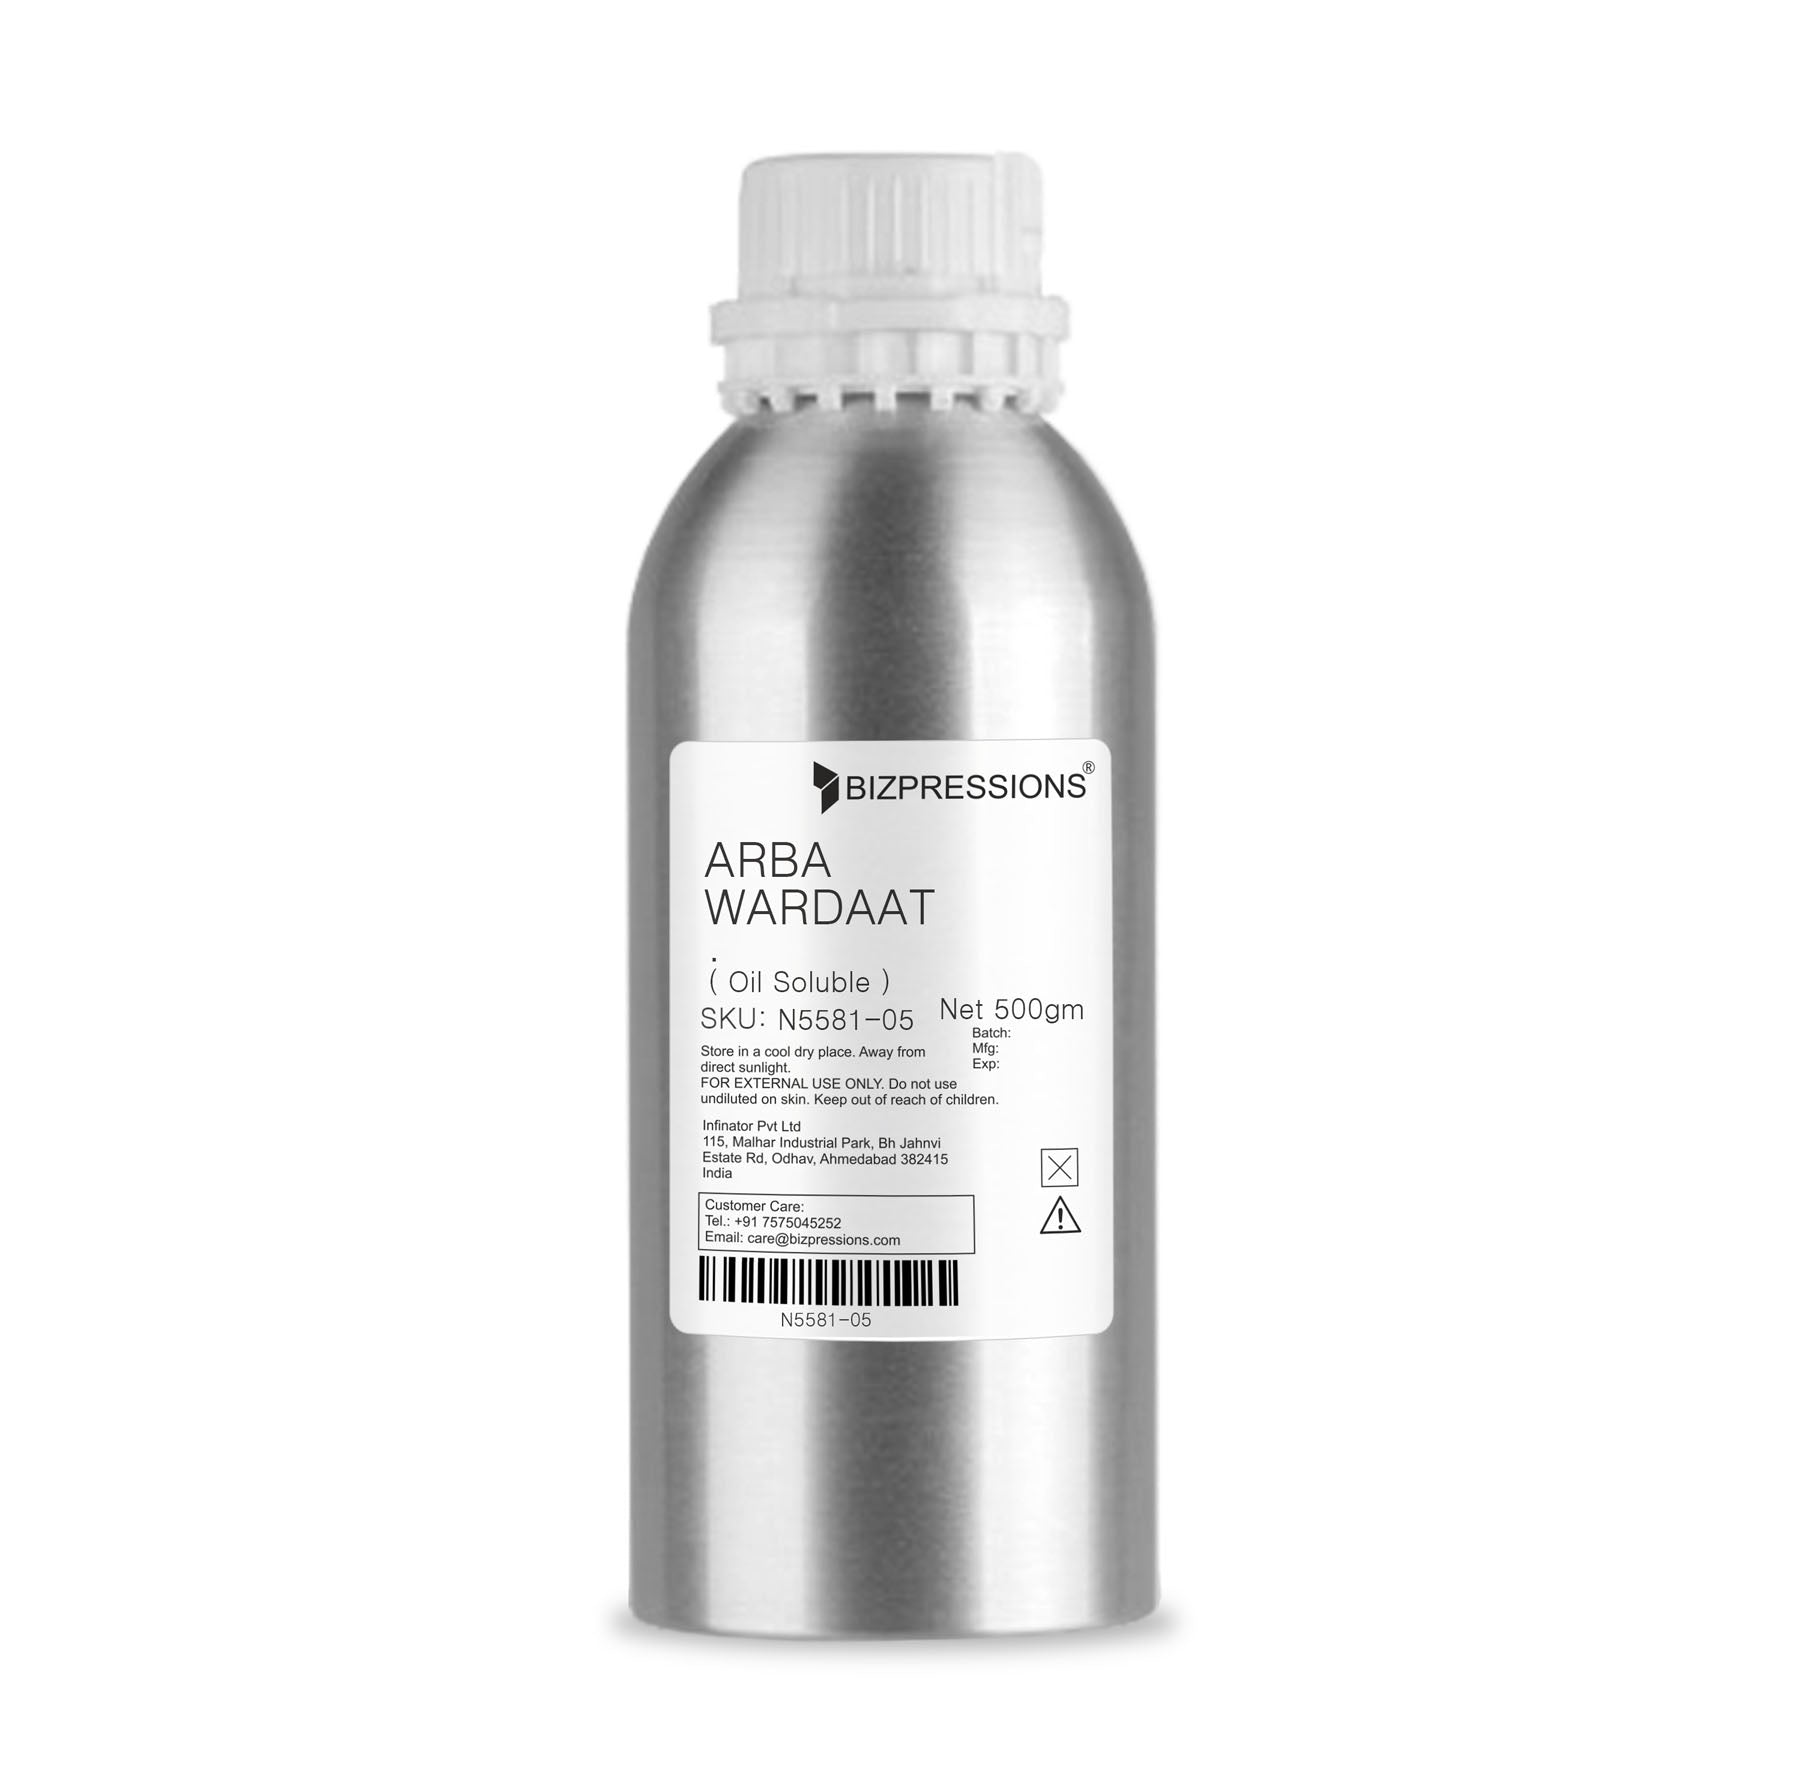 ARBA WARDAAT - Fragrance ( Oil Soluble ) - 500 gm